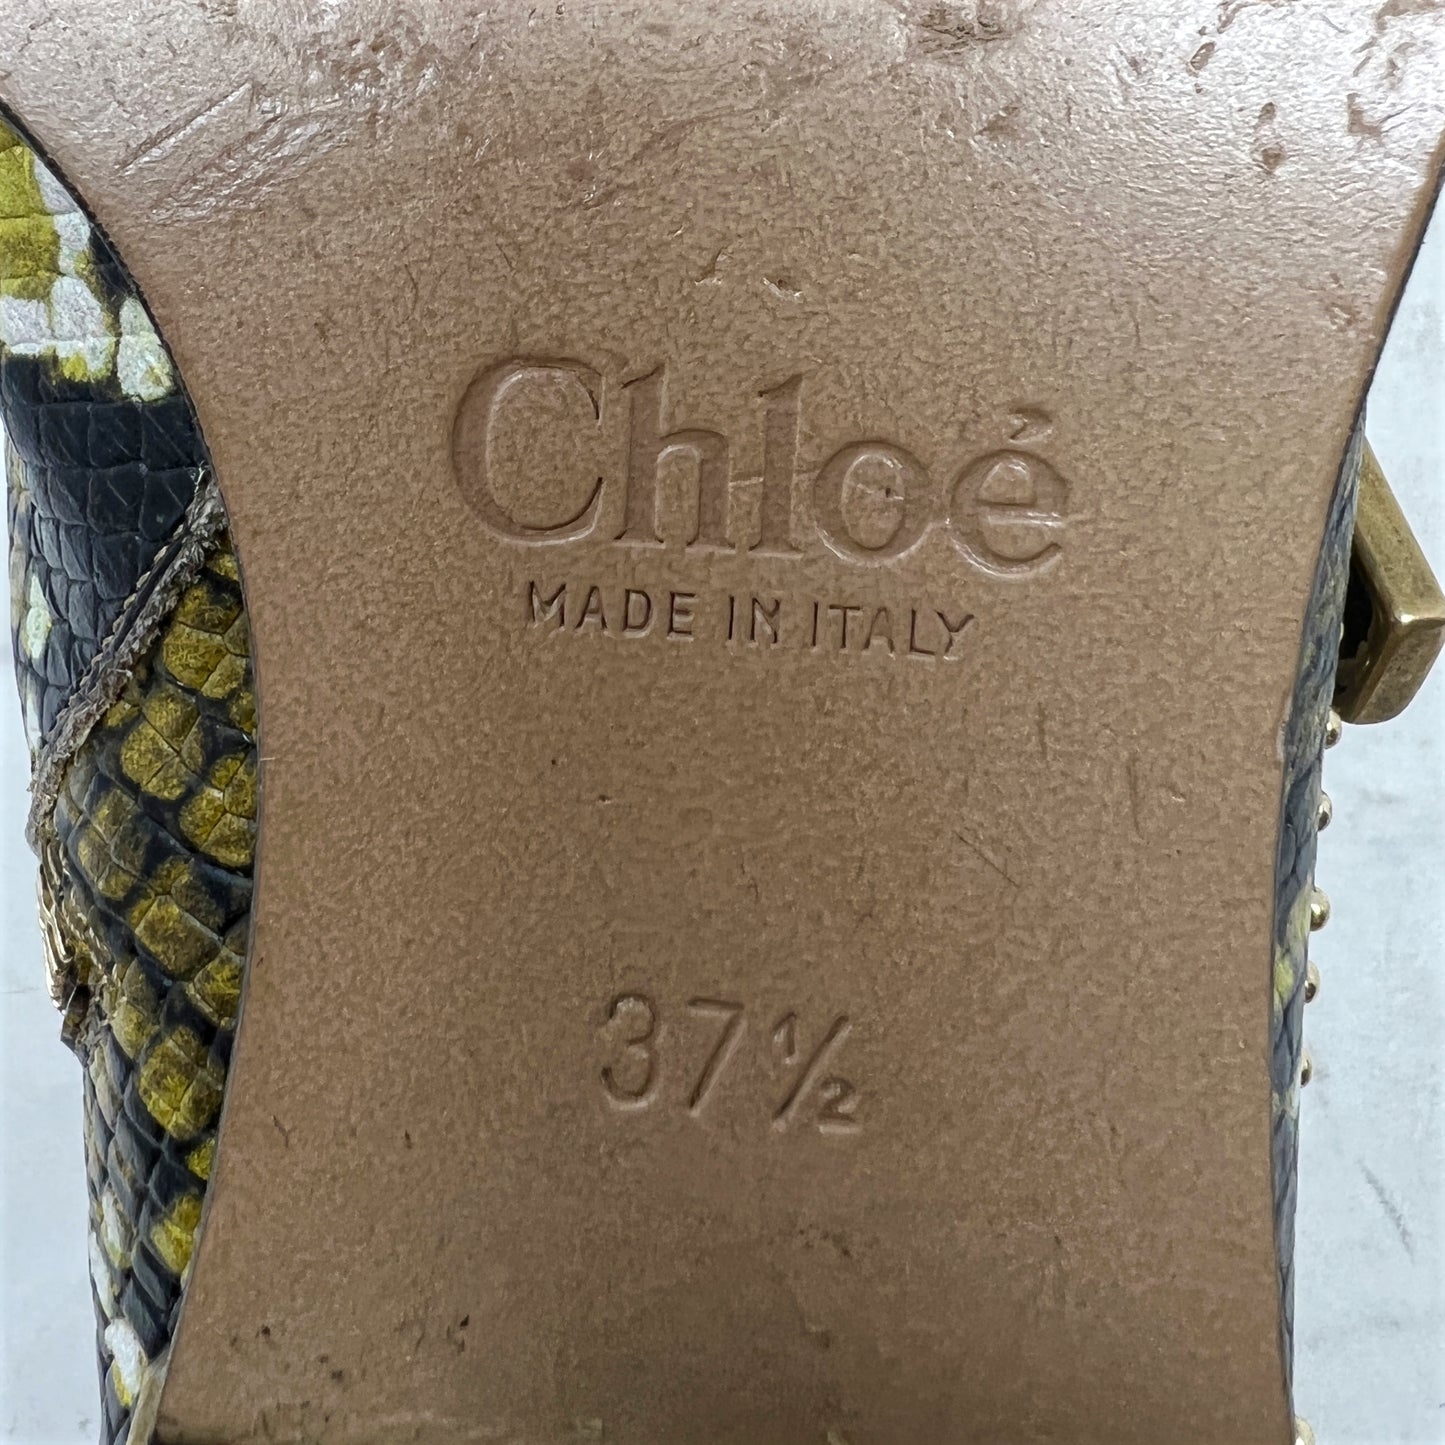 Chloe Susanna Python Gold Studded Buckle Ankle Boots Size 37.5